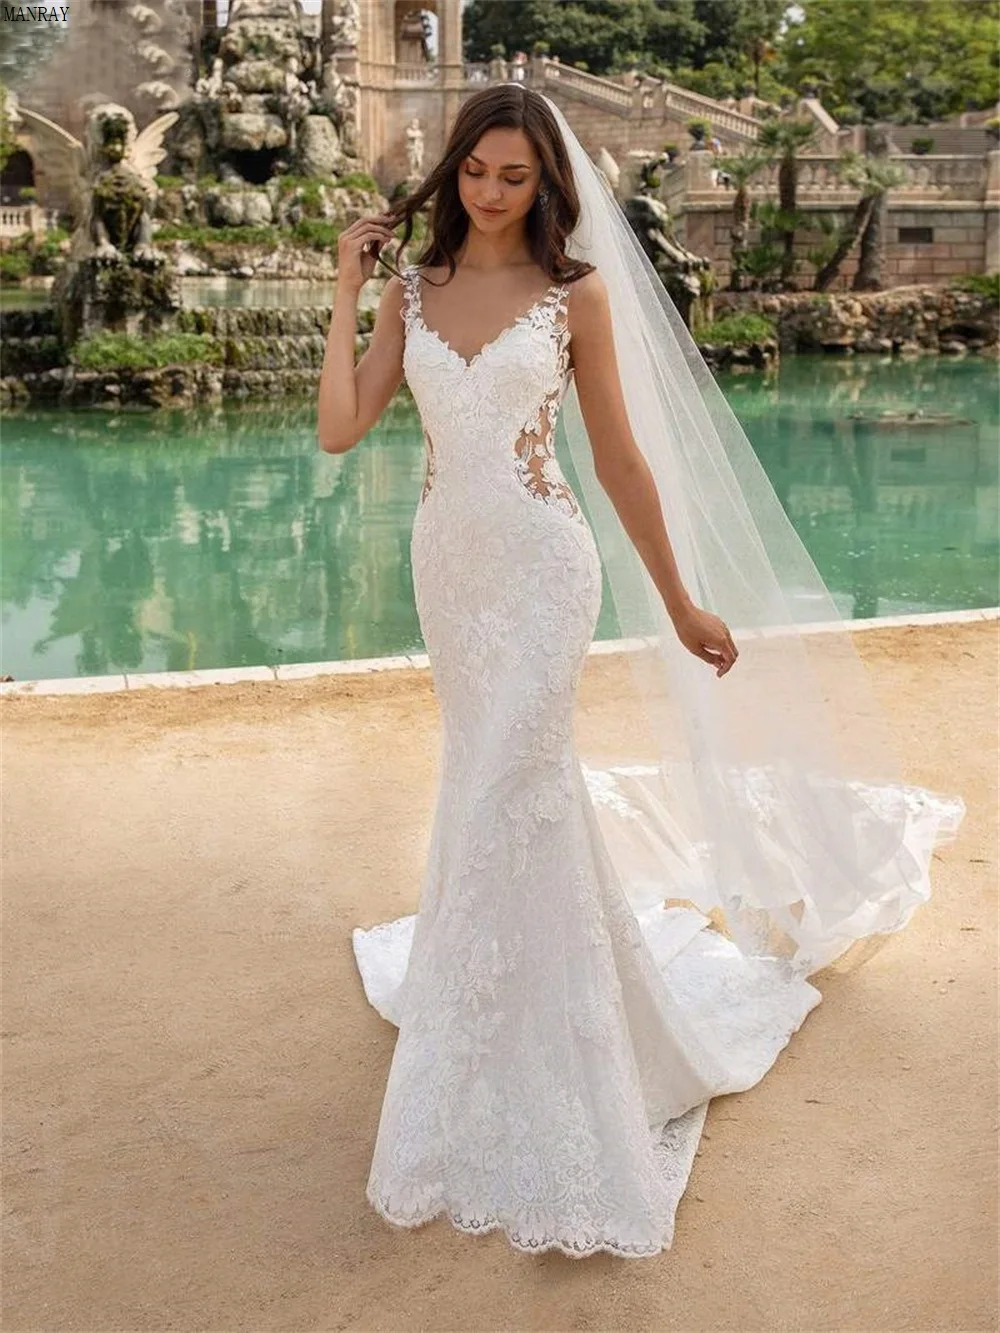 

MANRAY Illusion Waistline Lace Wedding Dress Mermaid Backless Bridal Robes Appliques Court Train Bride Dresses Vestido De Noiva